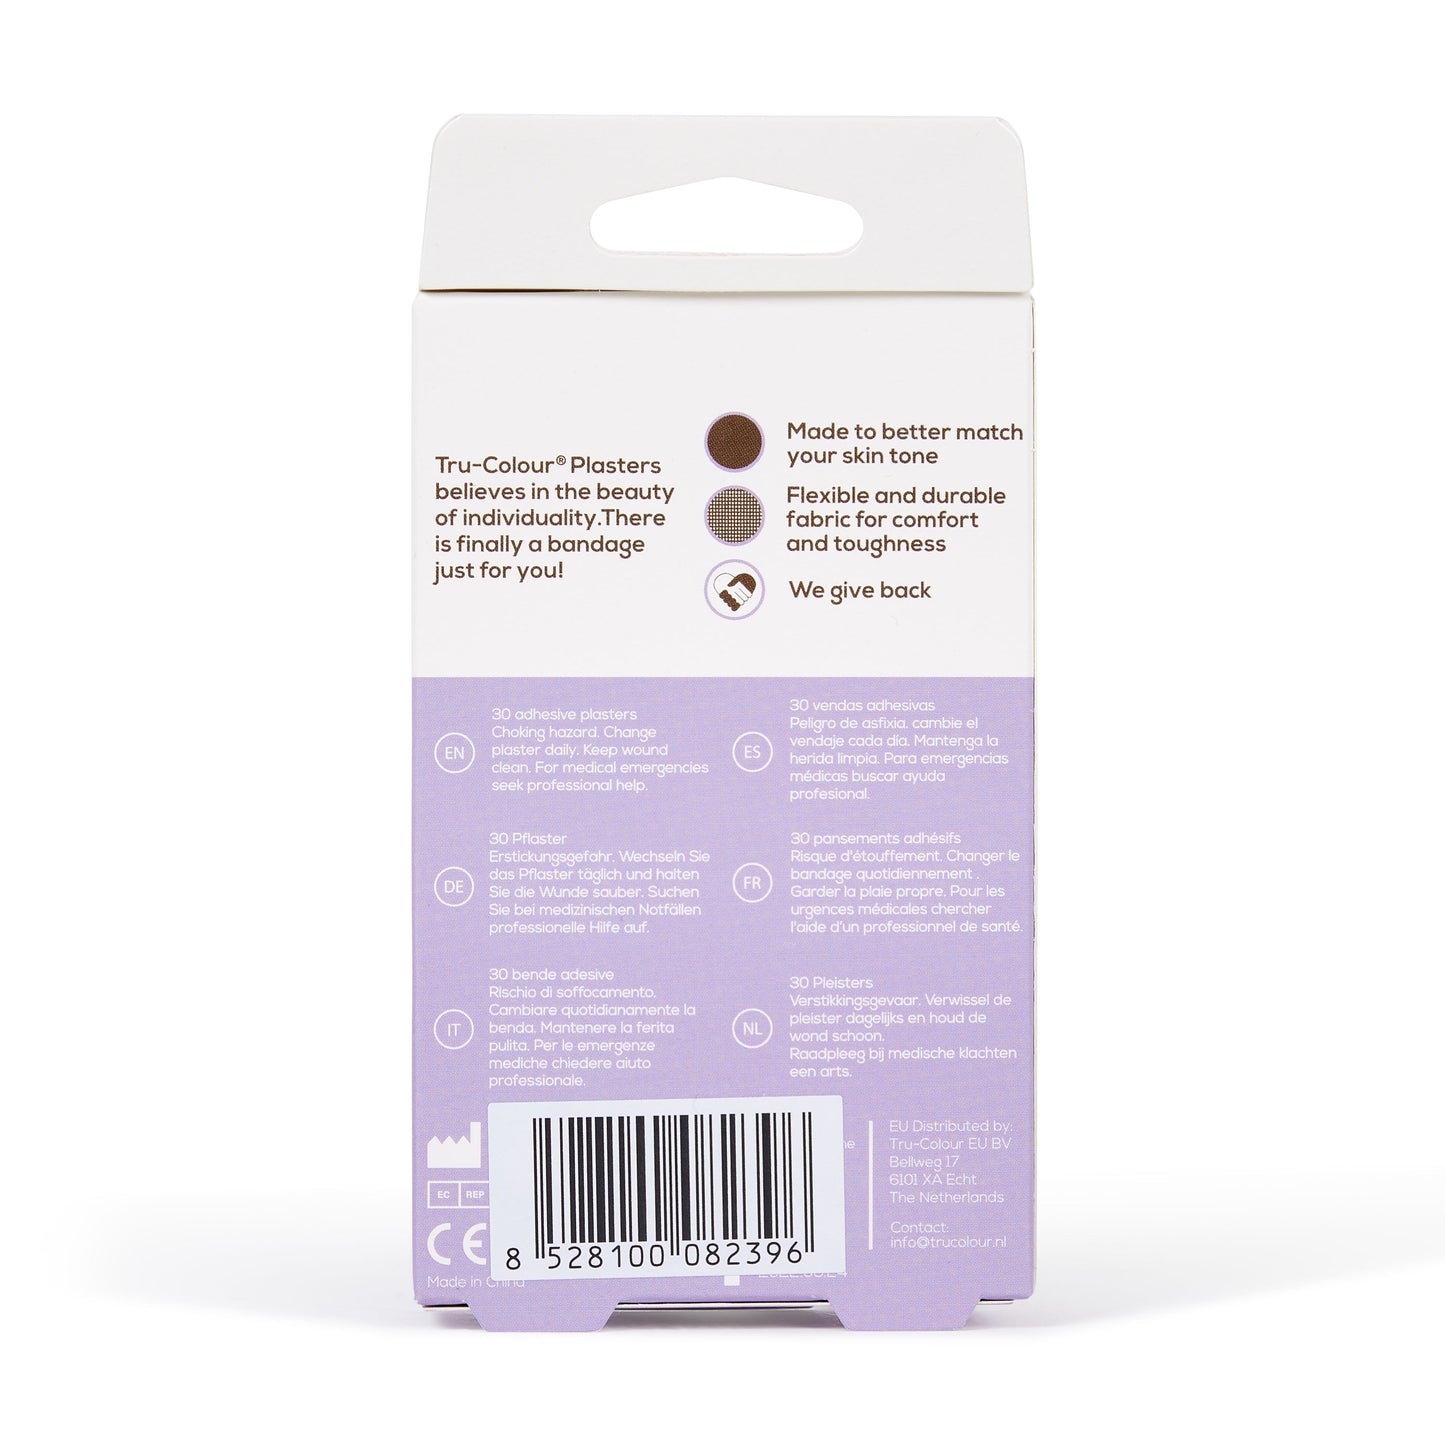 Tru-Colour Skin Tone Plasters Dark Brown Skintone - 30 count - 2 sizes